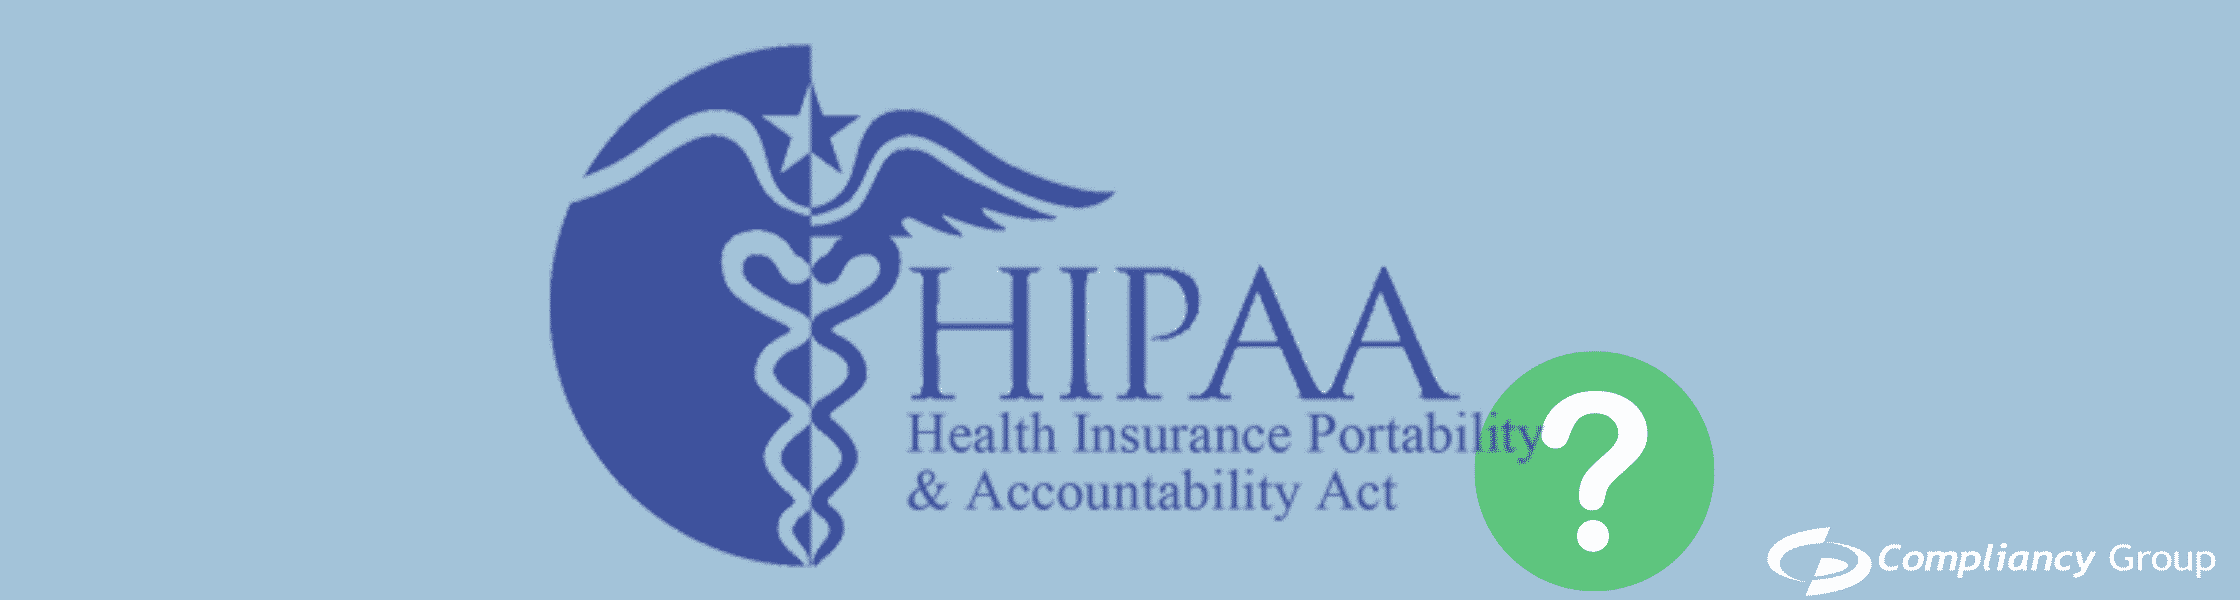 HIPAA Medical